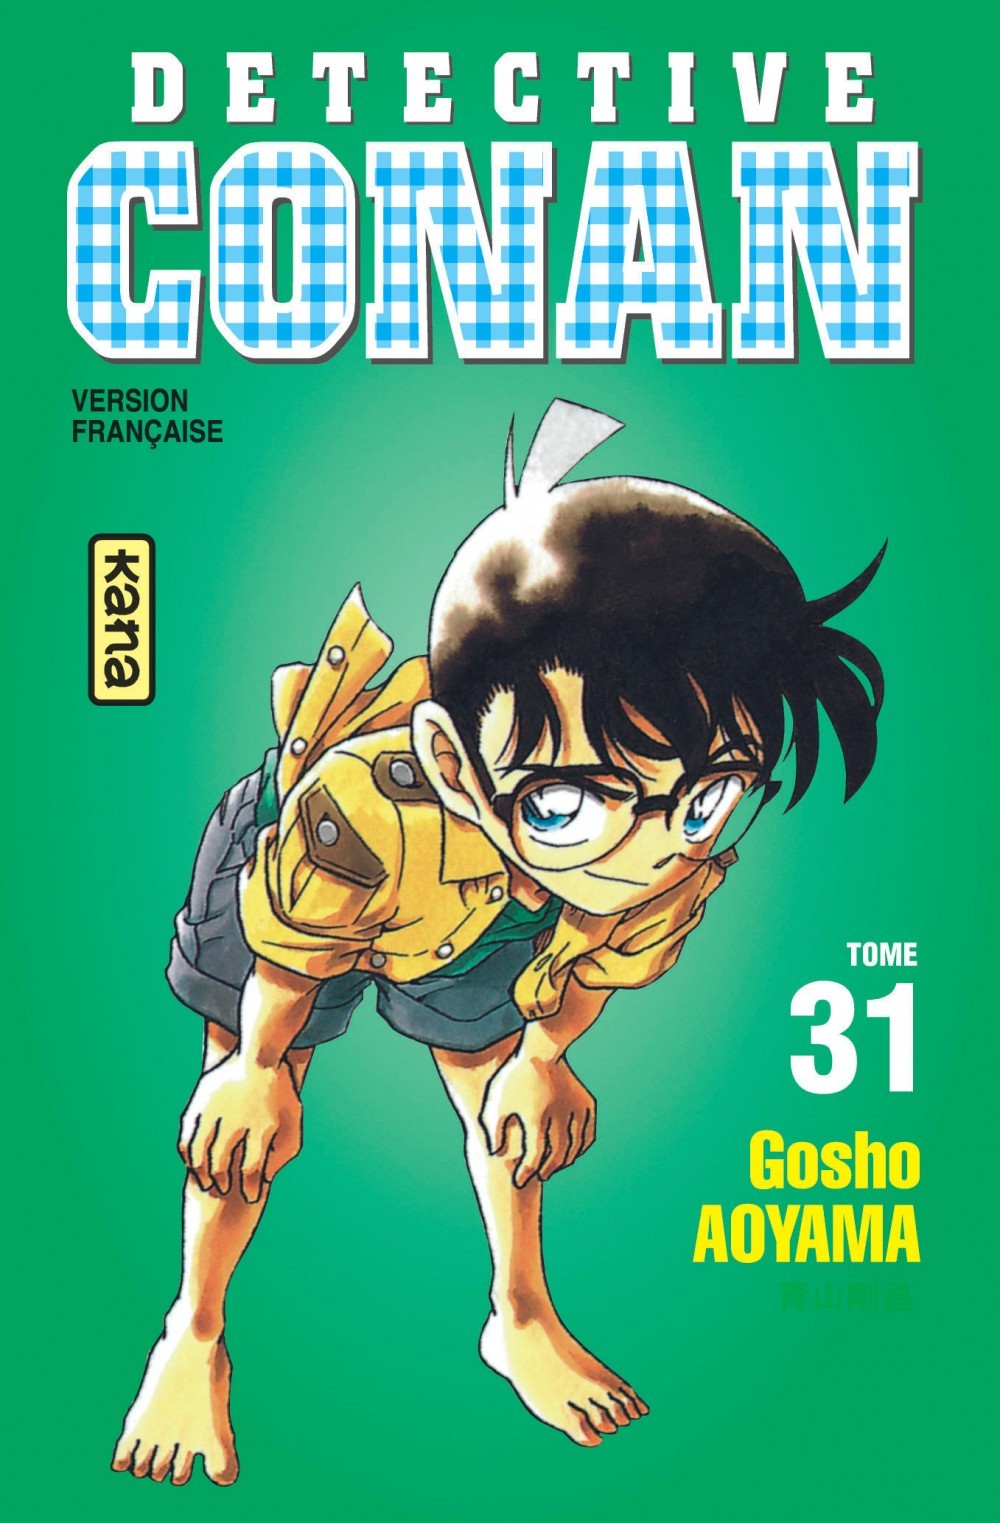 Détective Conan - Tome 31 (9782871294207-front-cover)